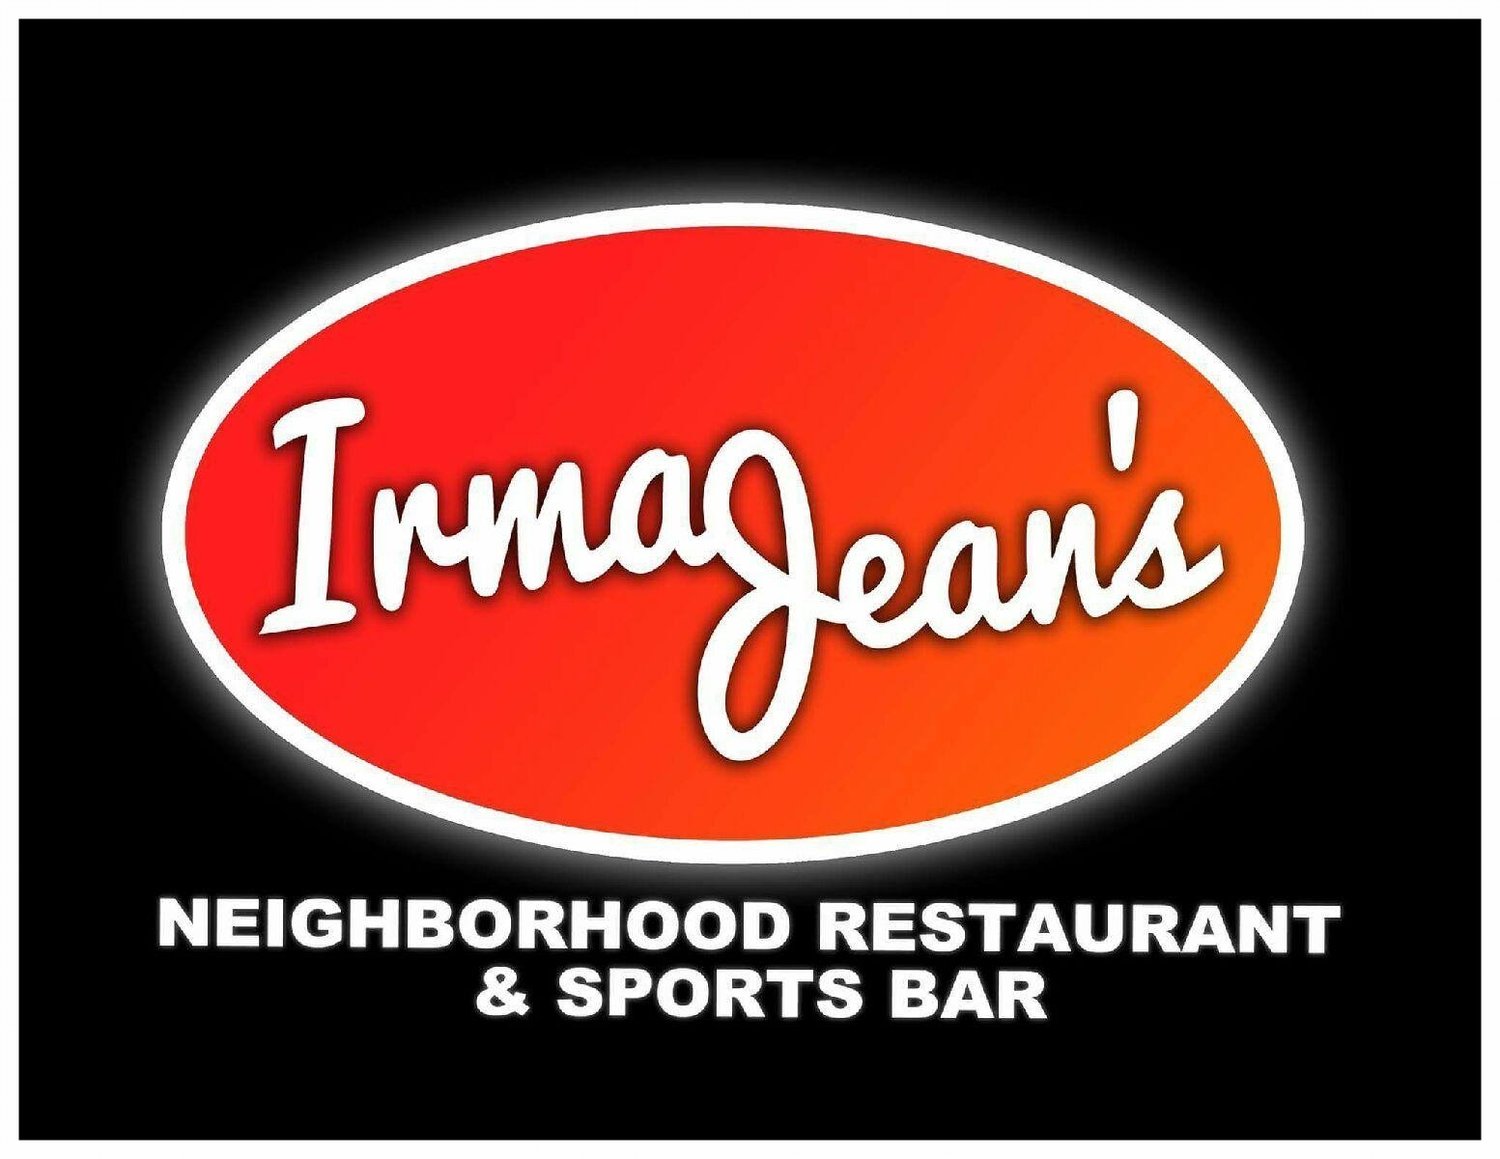 Irma Jeans Neighborhood Restaurant and Sports Bar